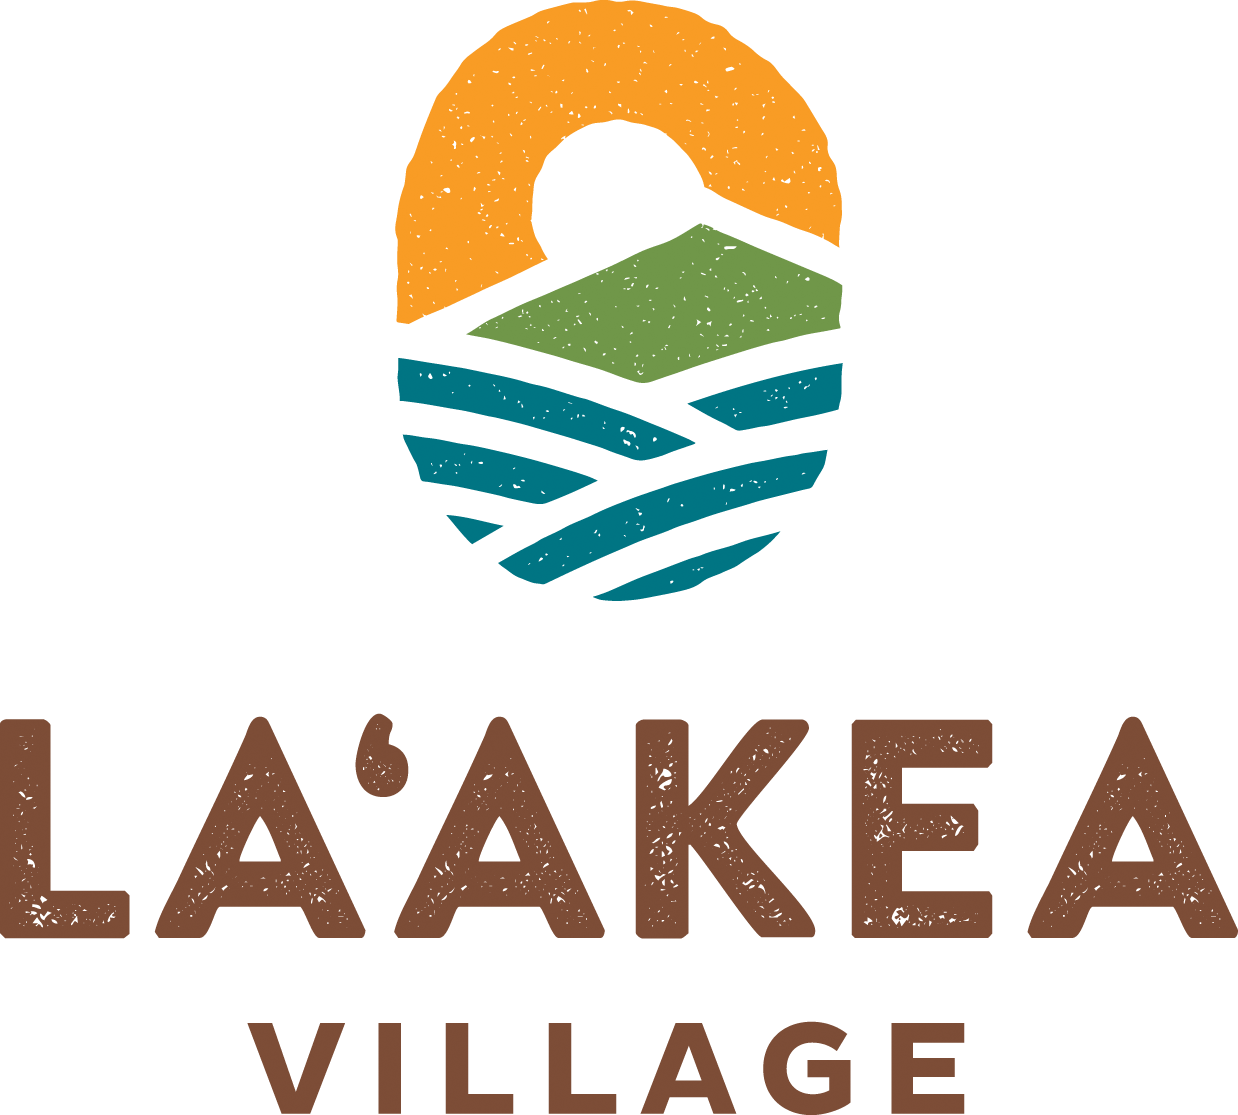 La'akea Village